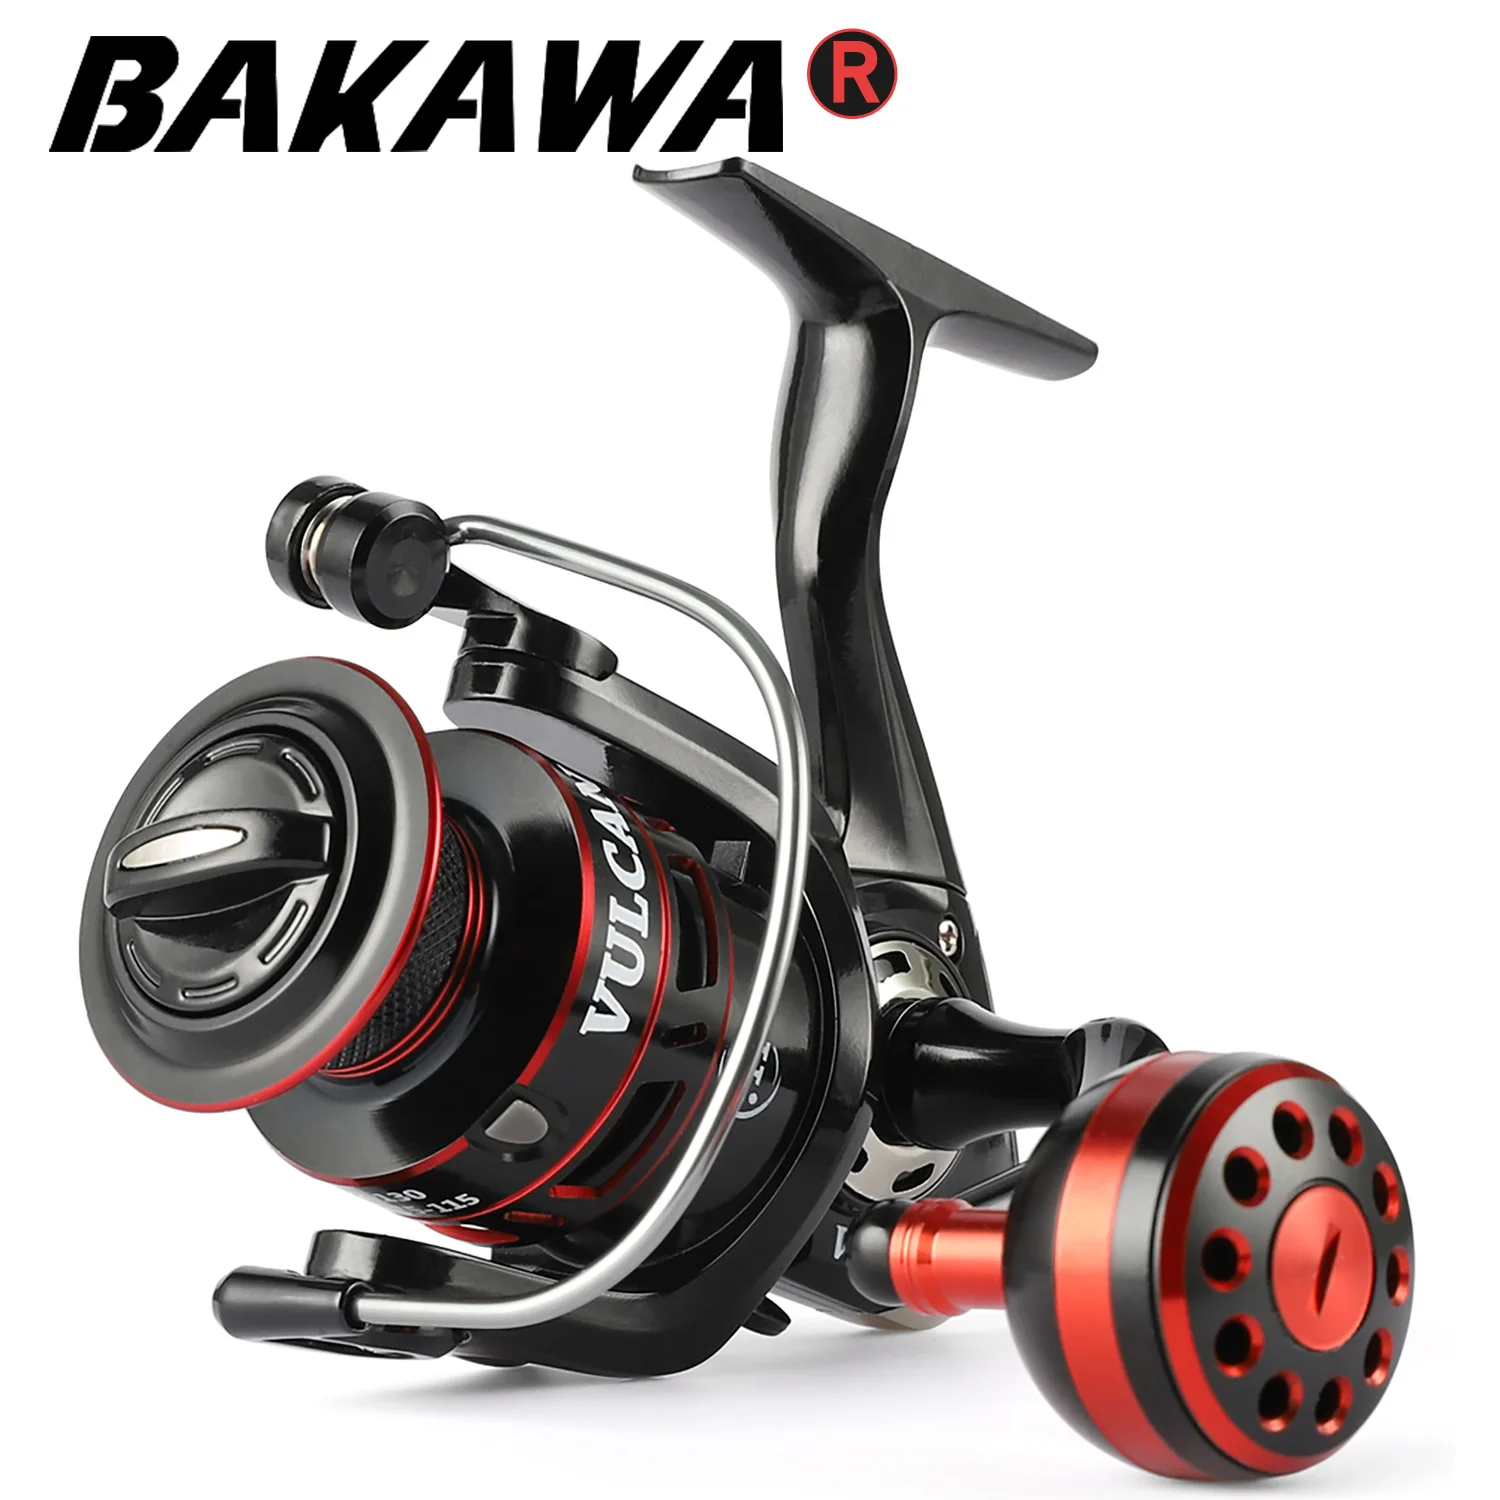 

BAKAWA Spinning Fishing Reel 1000-7000 Series Pesca 5.2:1 Gear Ratio 10kg Max Drag Power Metal Spool Sea Saltwater Carp Tackle